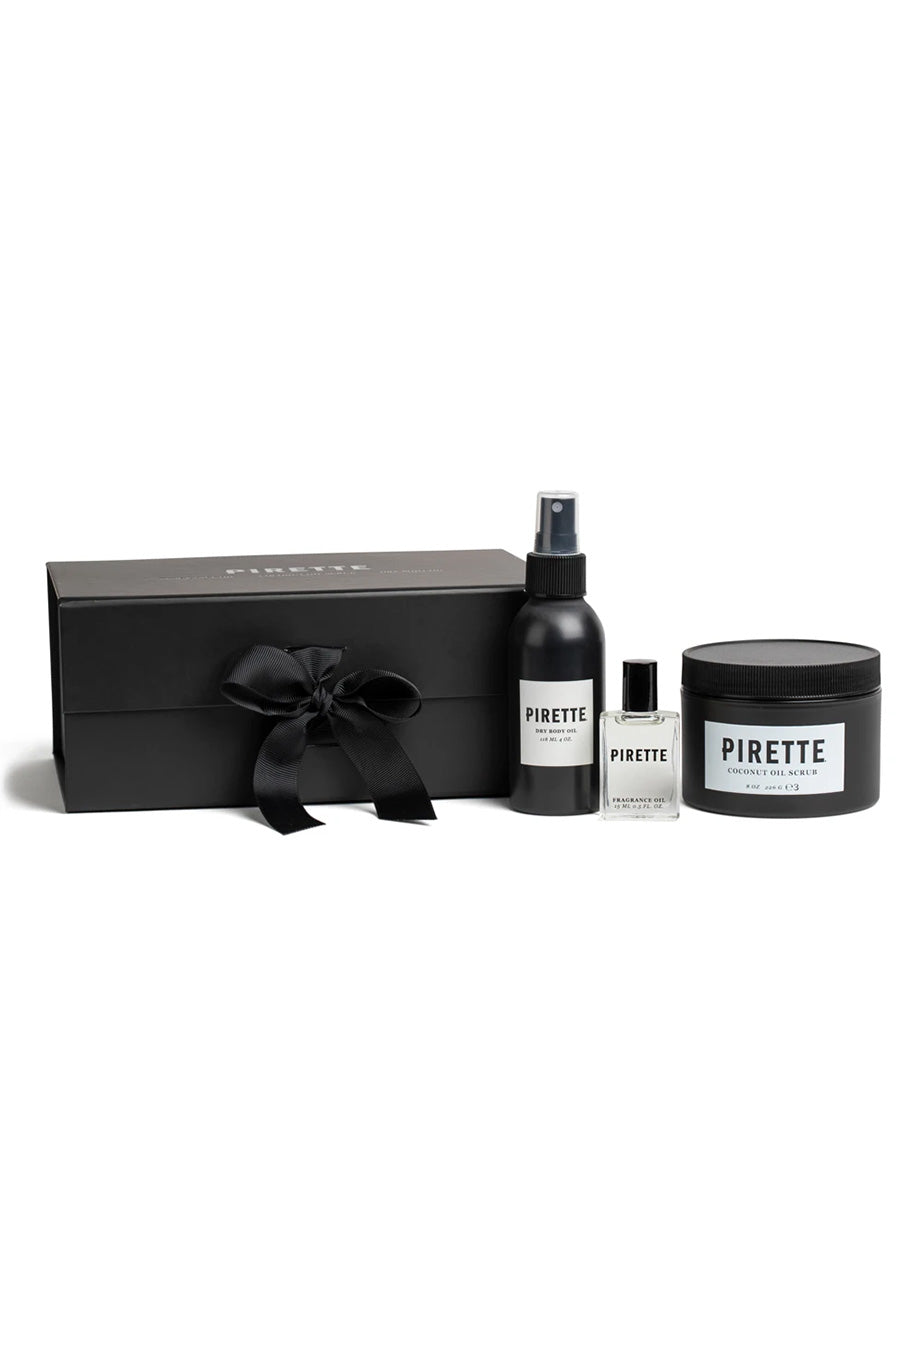 Pirette Gift Box - Main Image Number 2 of 4